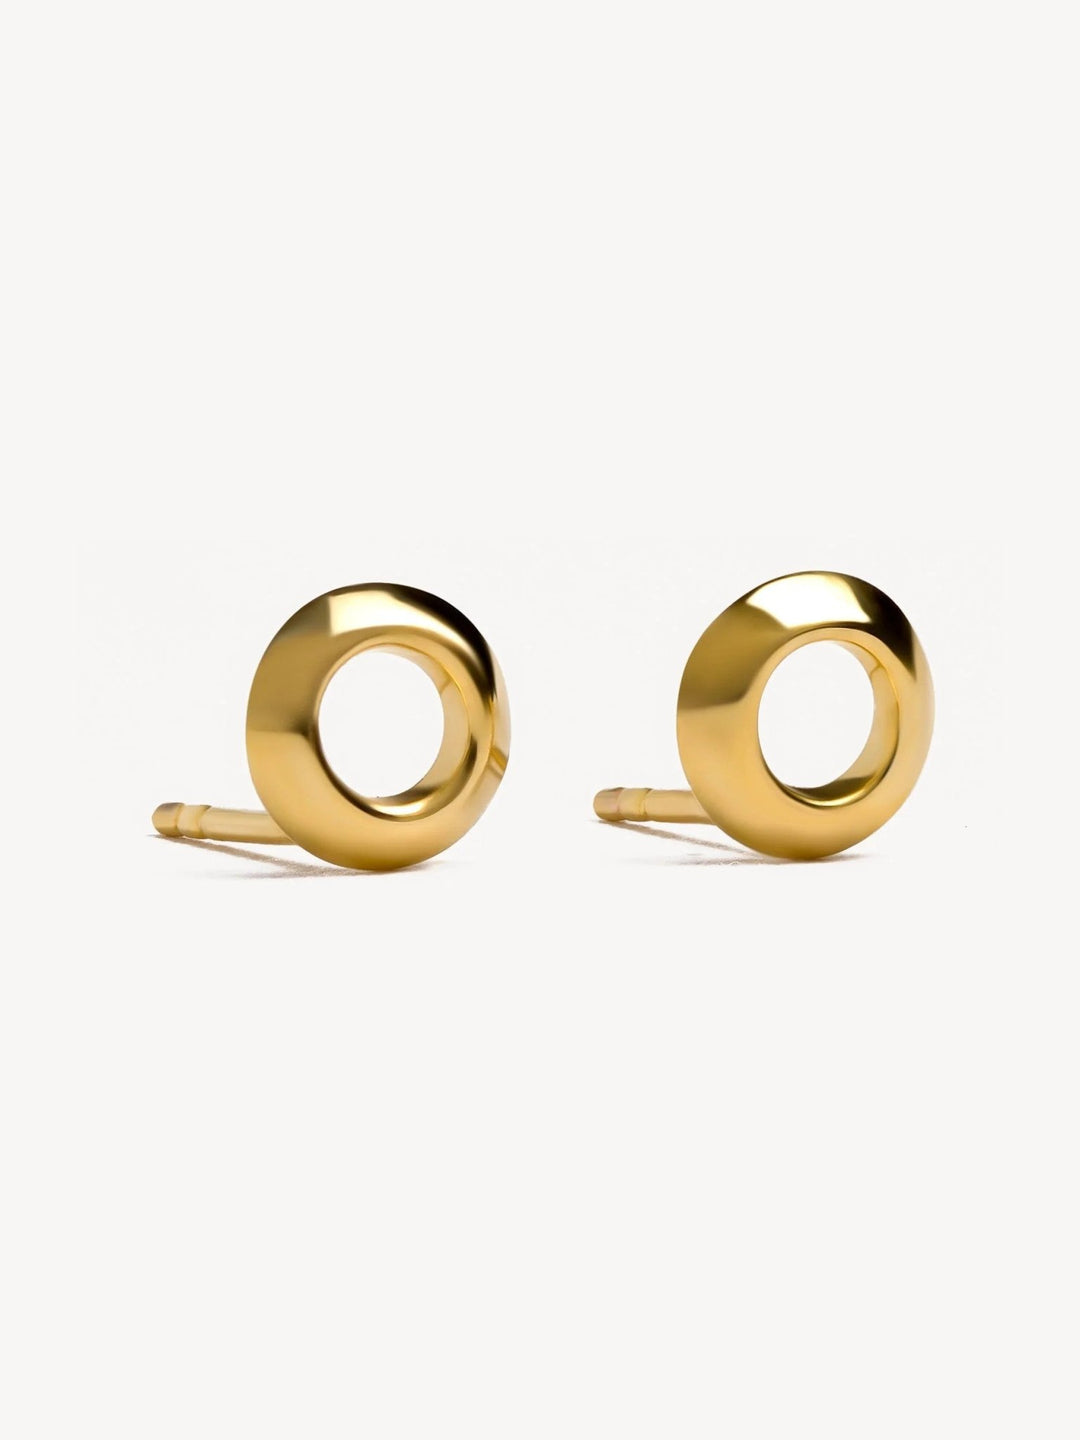 Perugina Circle Stud Earrings - 24K Gold PlatedBackUpItemsBlack Friday saleLunai Jewelry